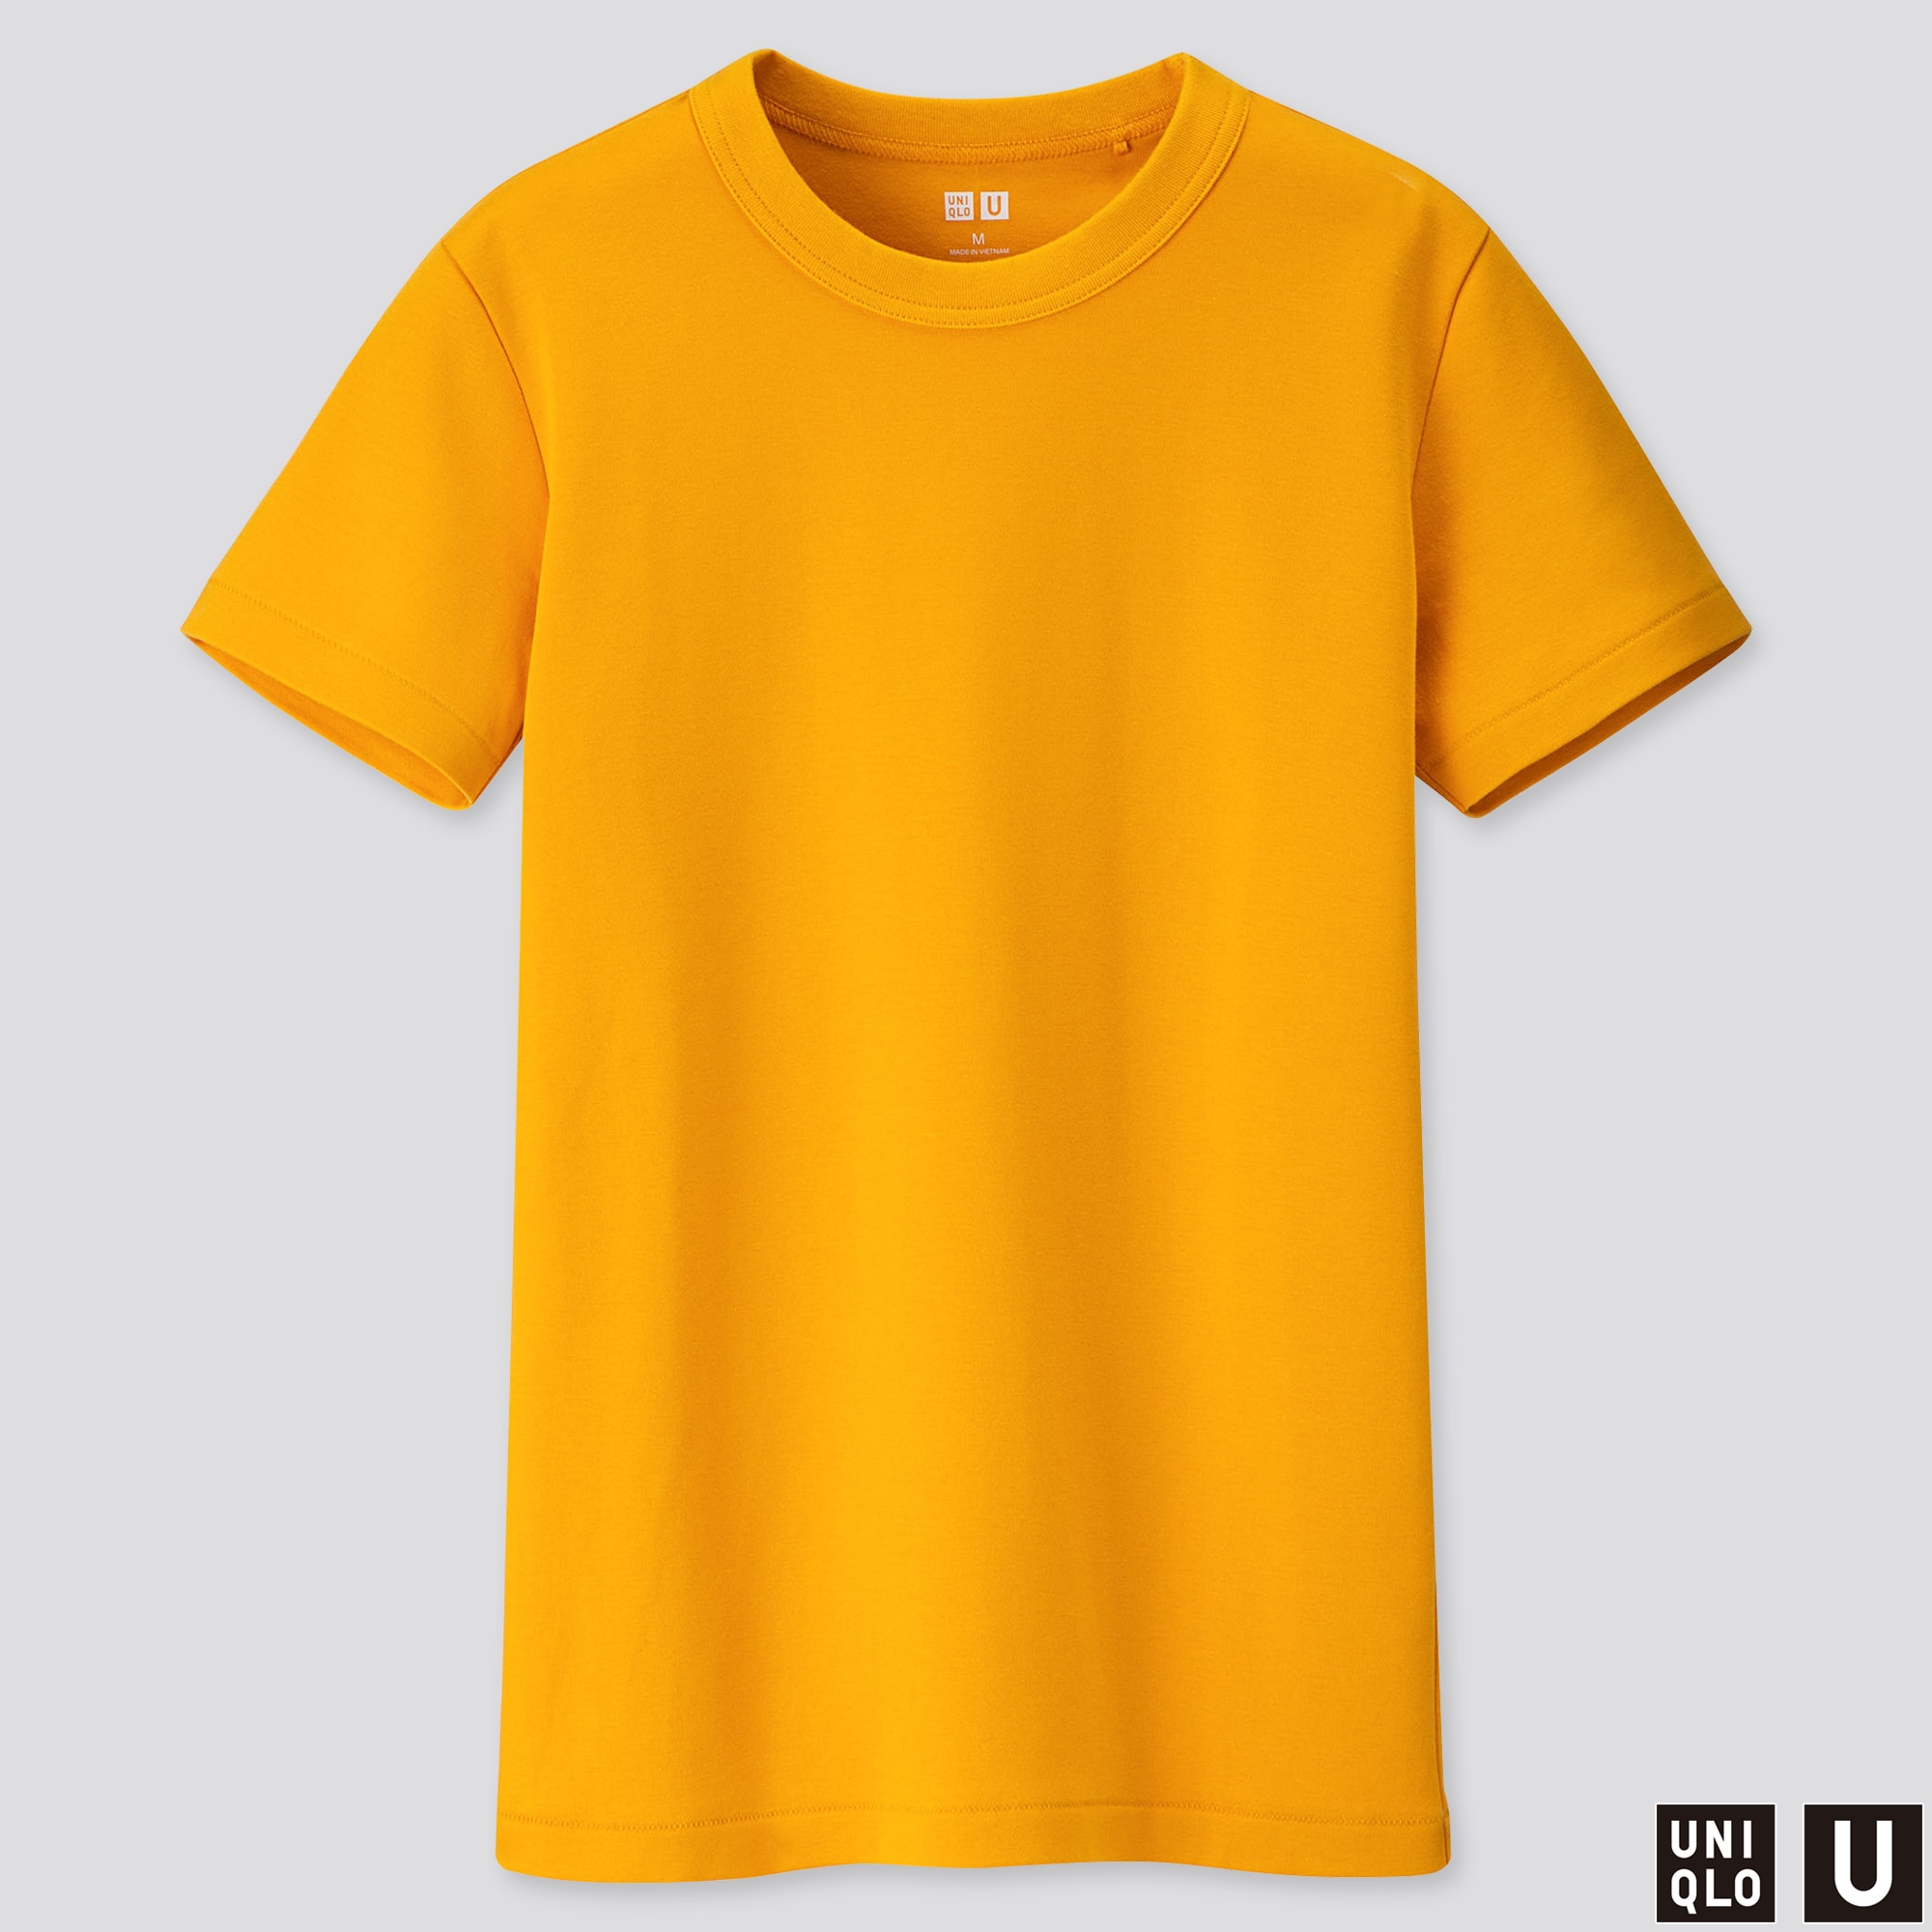 Uniqlo Sweatshirt Size Chart